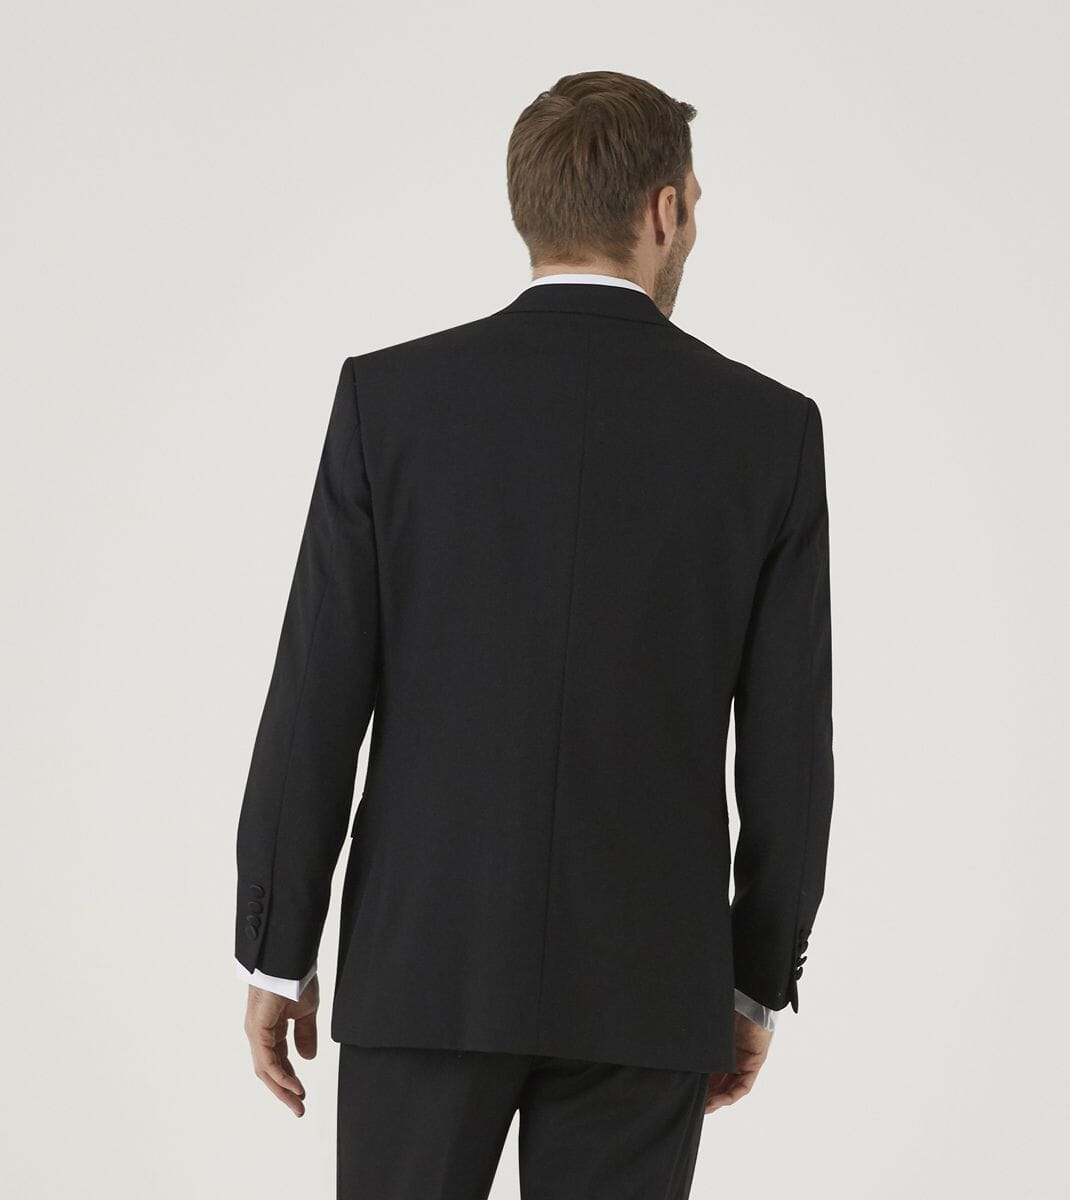 Cavendish Black 3 Piece Dinner Suit - Suits - - THREADPEPPER